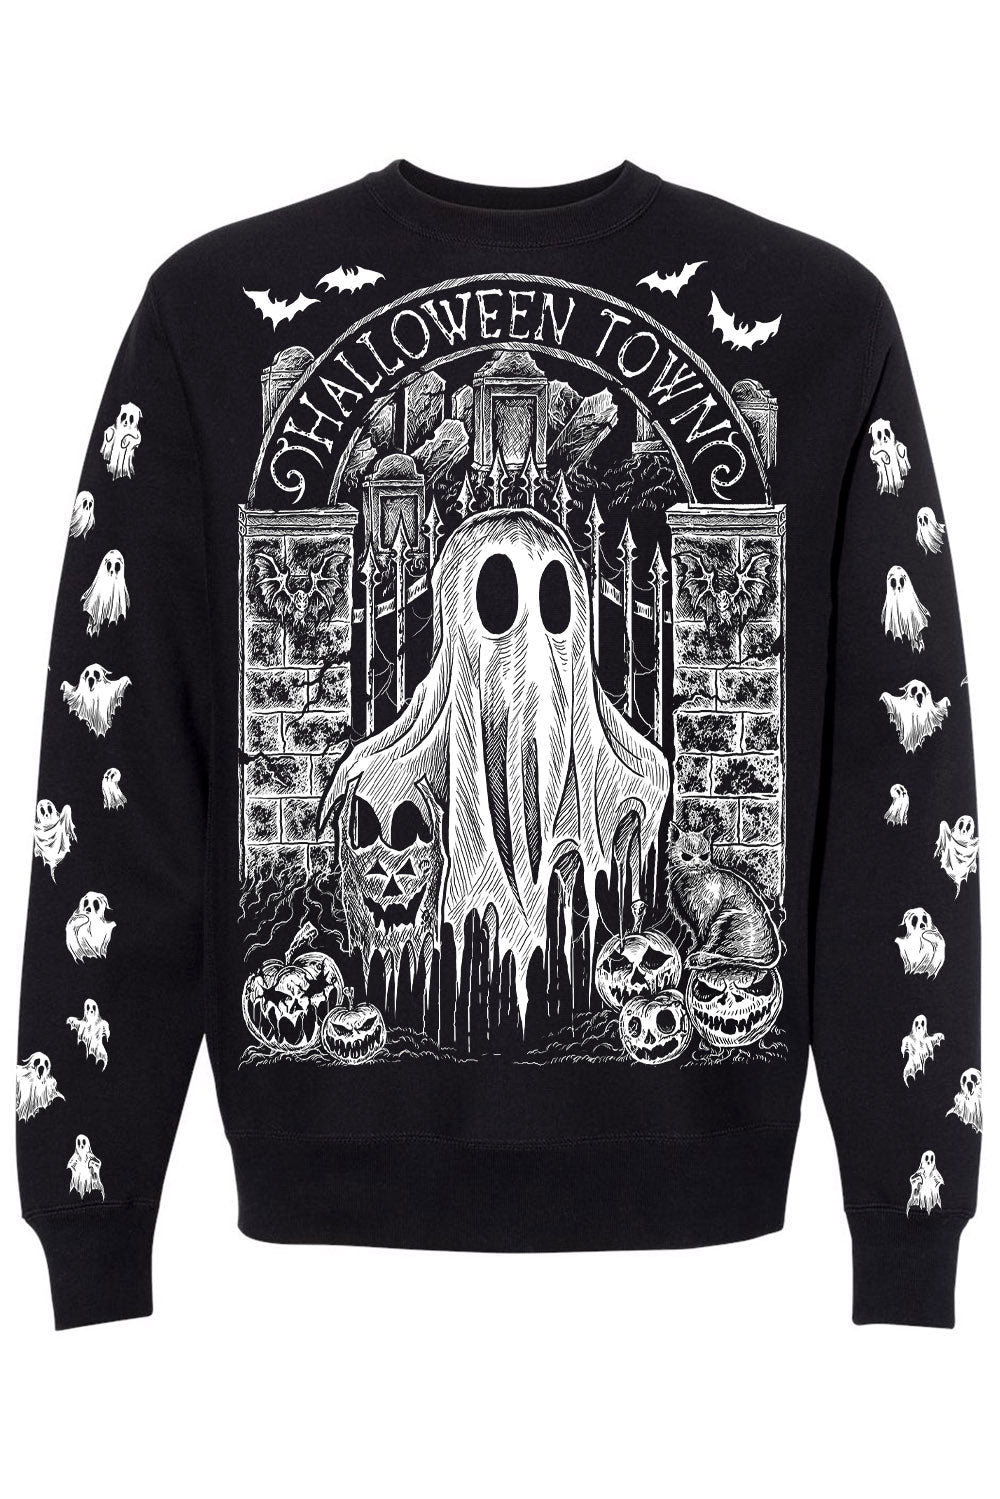 spooky halloween sweater